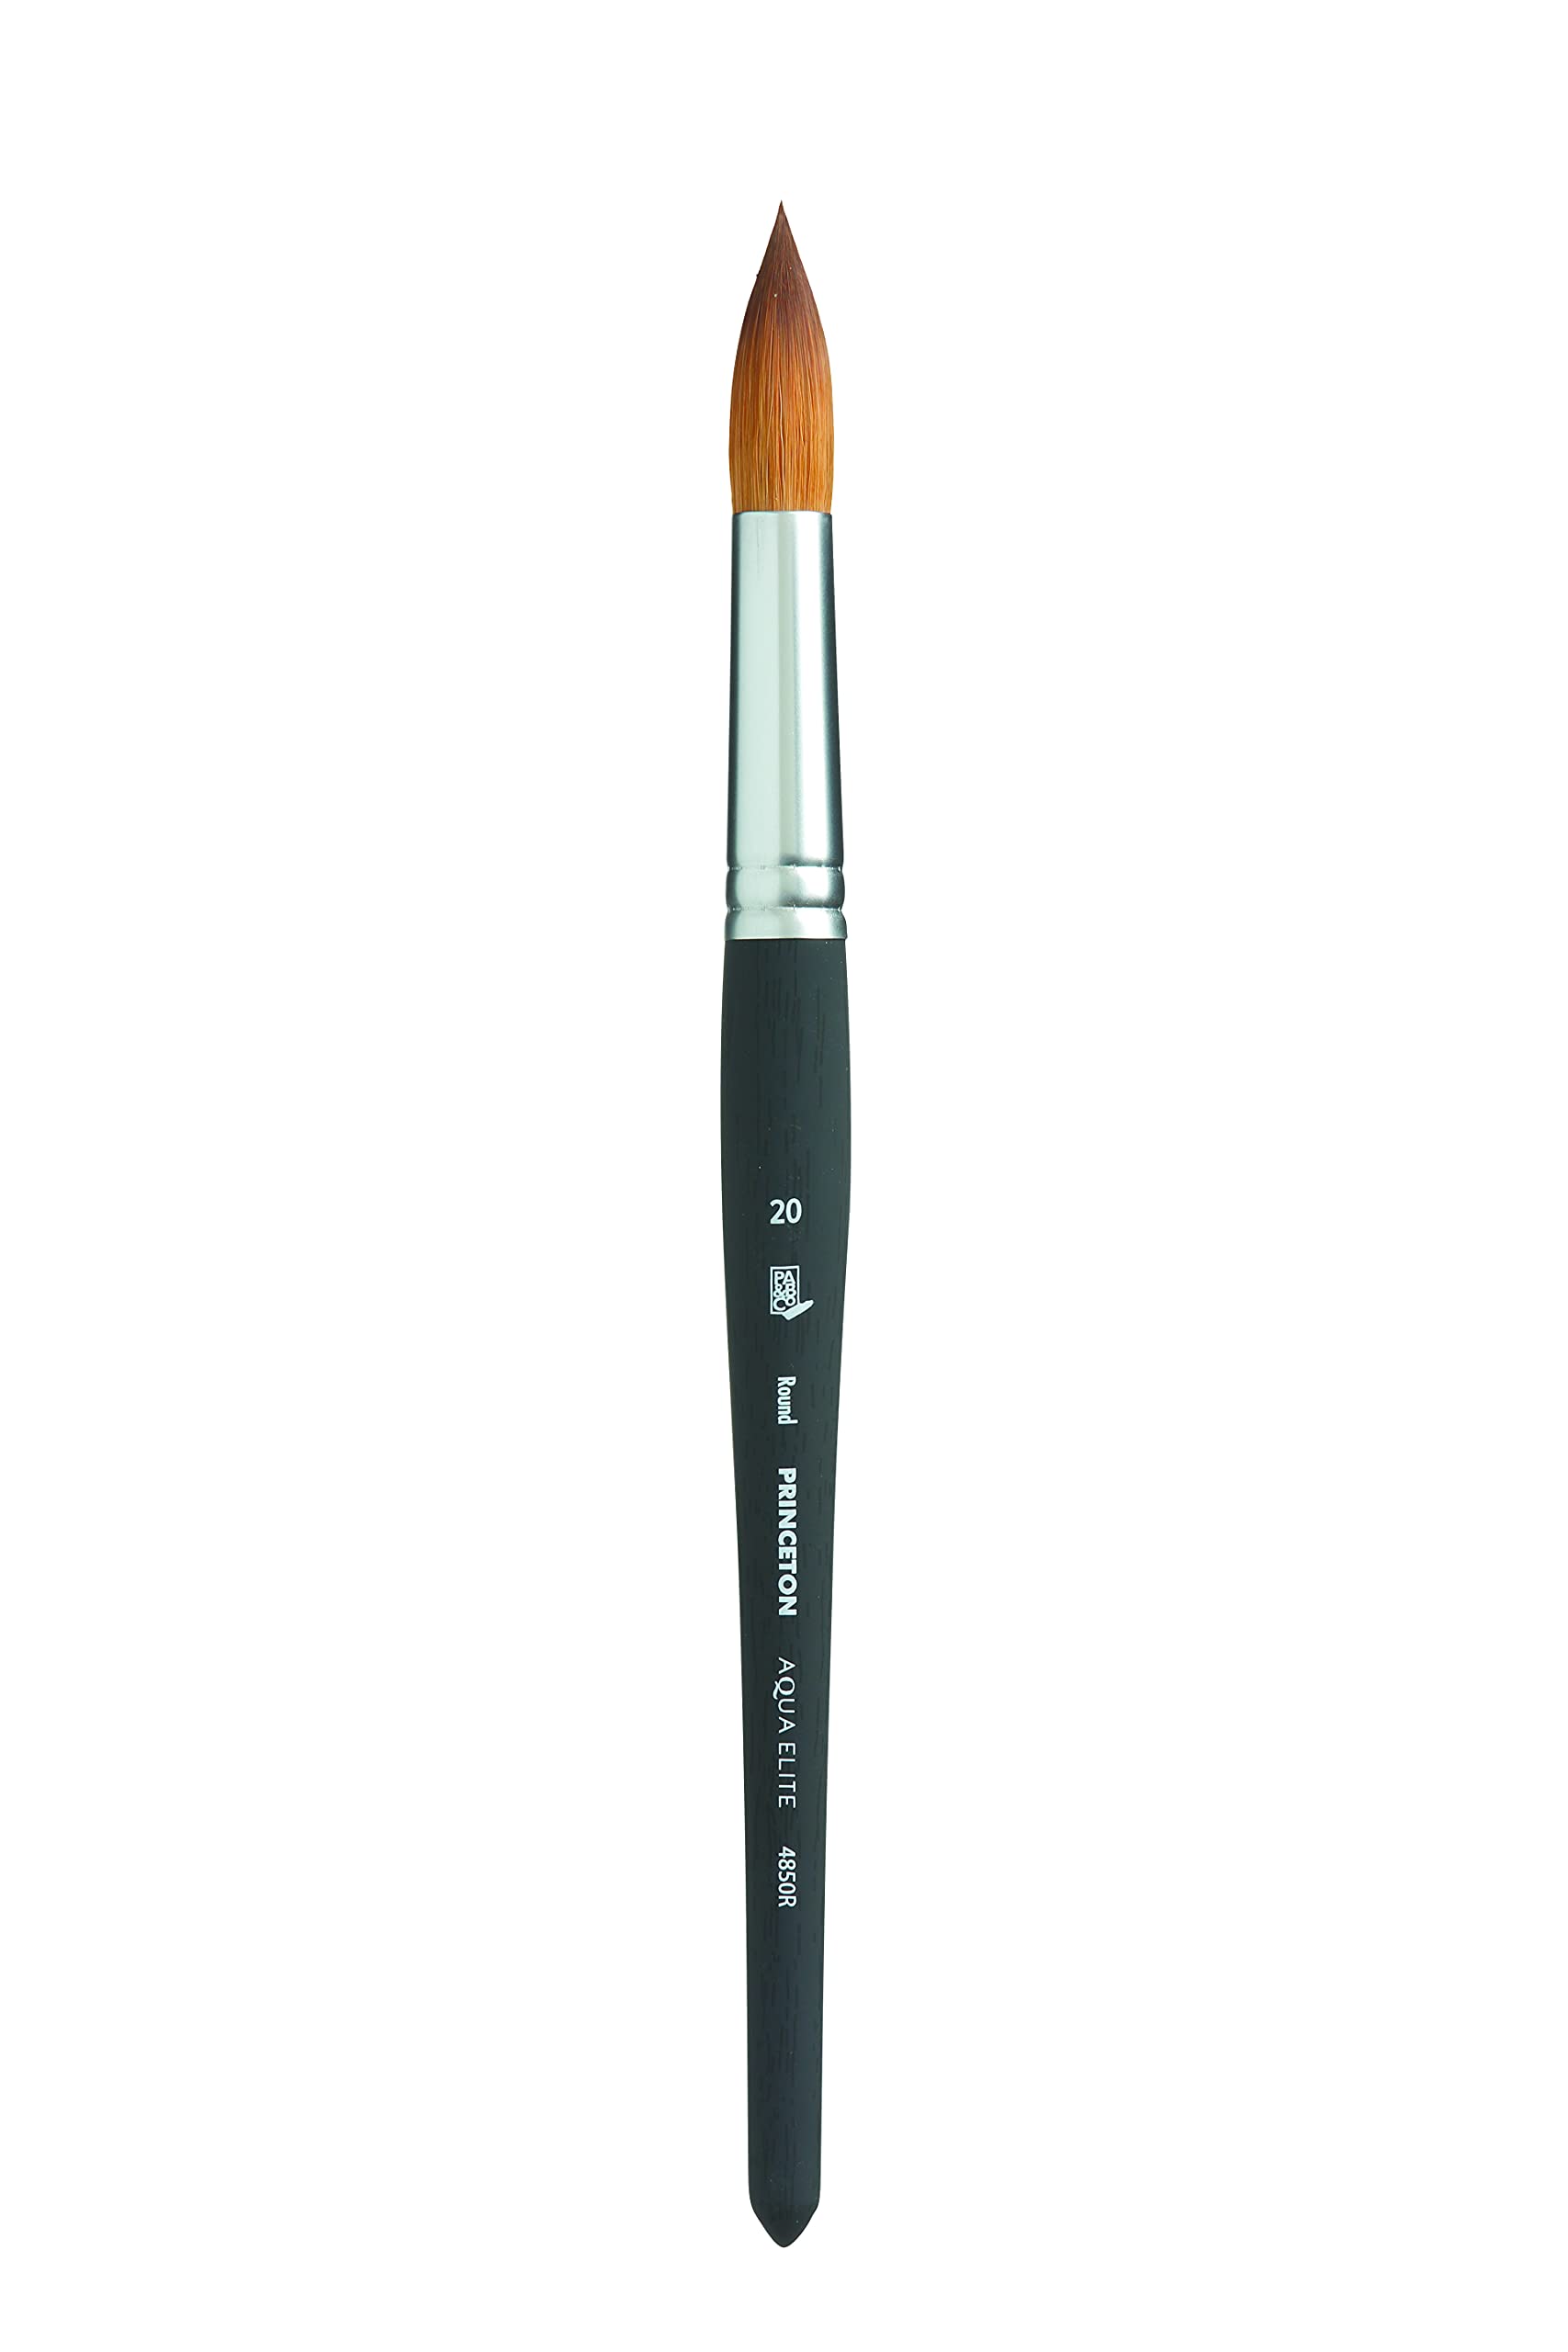 Princeton Aqua Elite Series 4850 Synthetic Brush - Rigger, Size 8